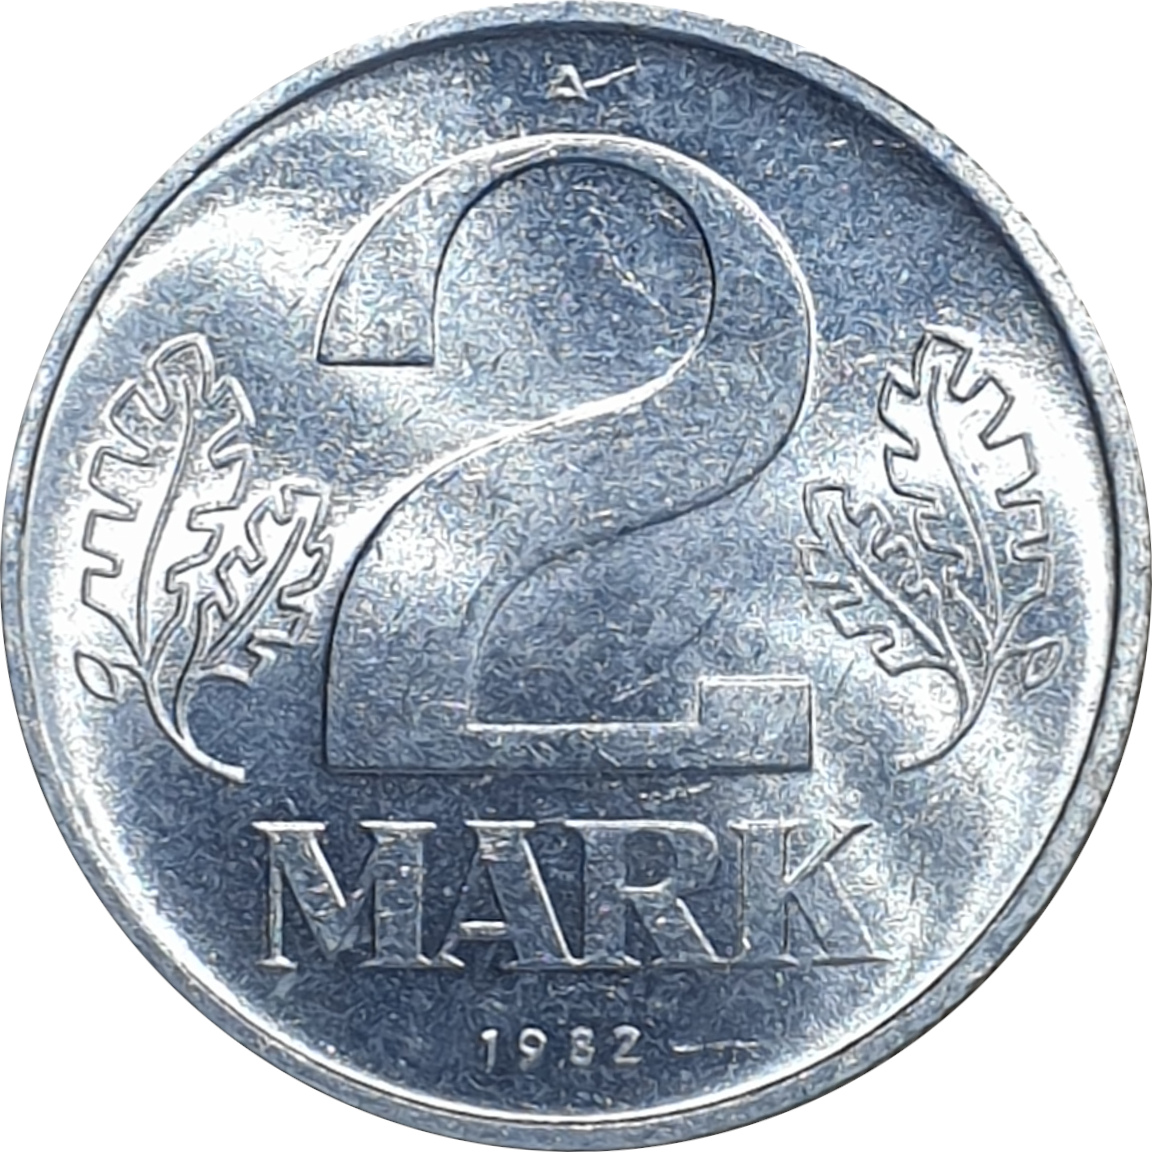 2 mark - Emblem - Large emblem